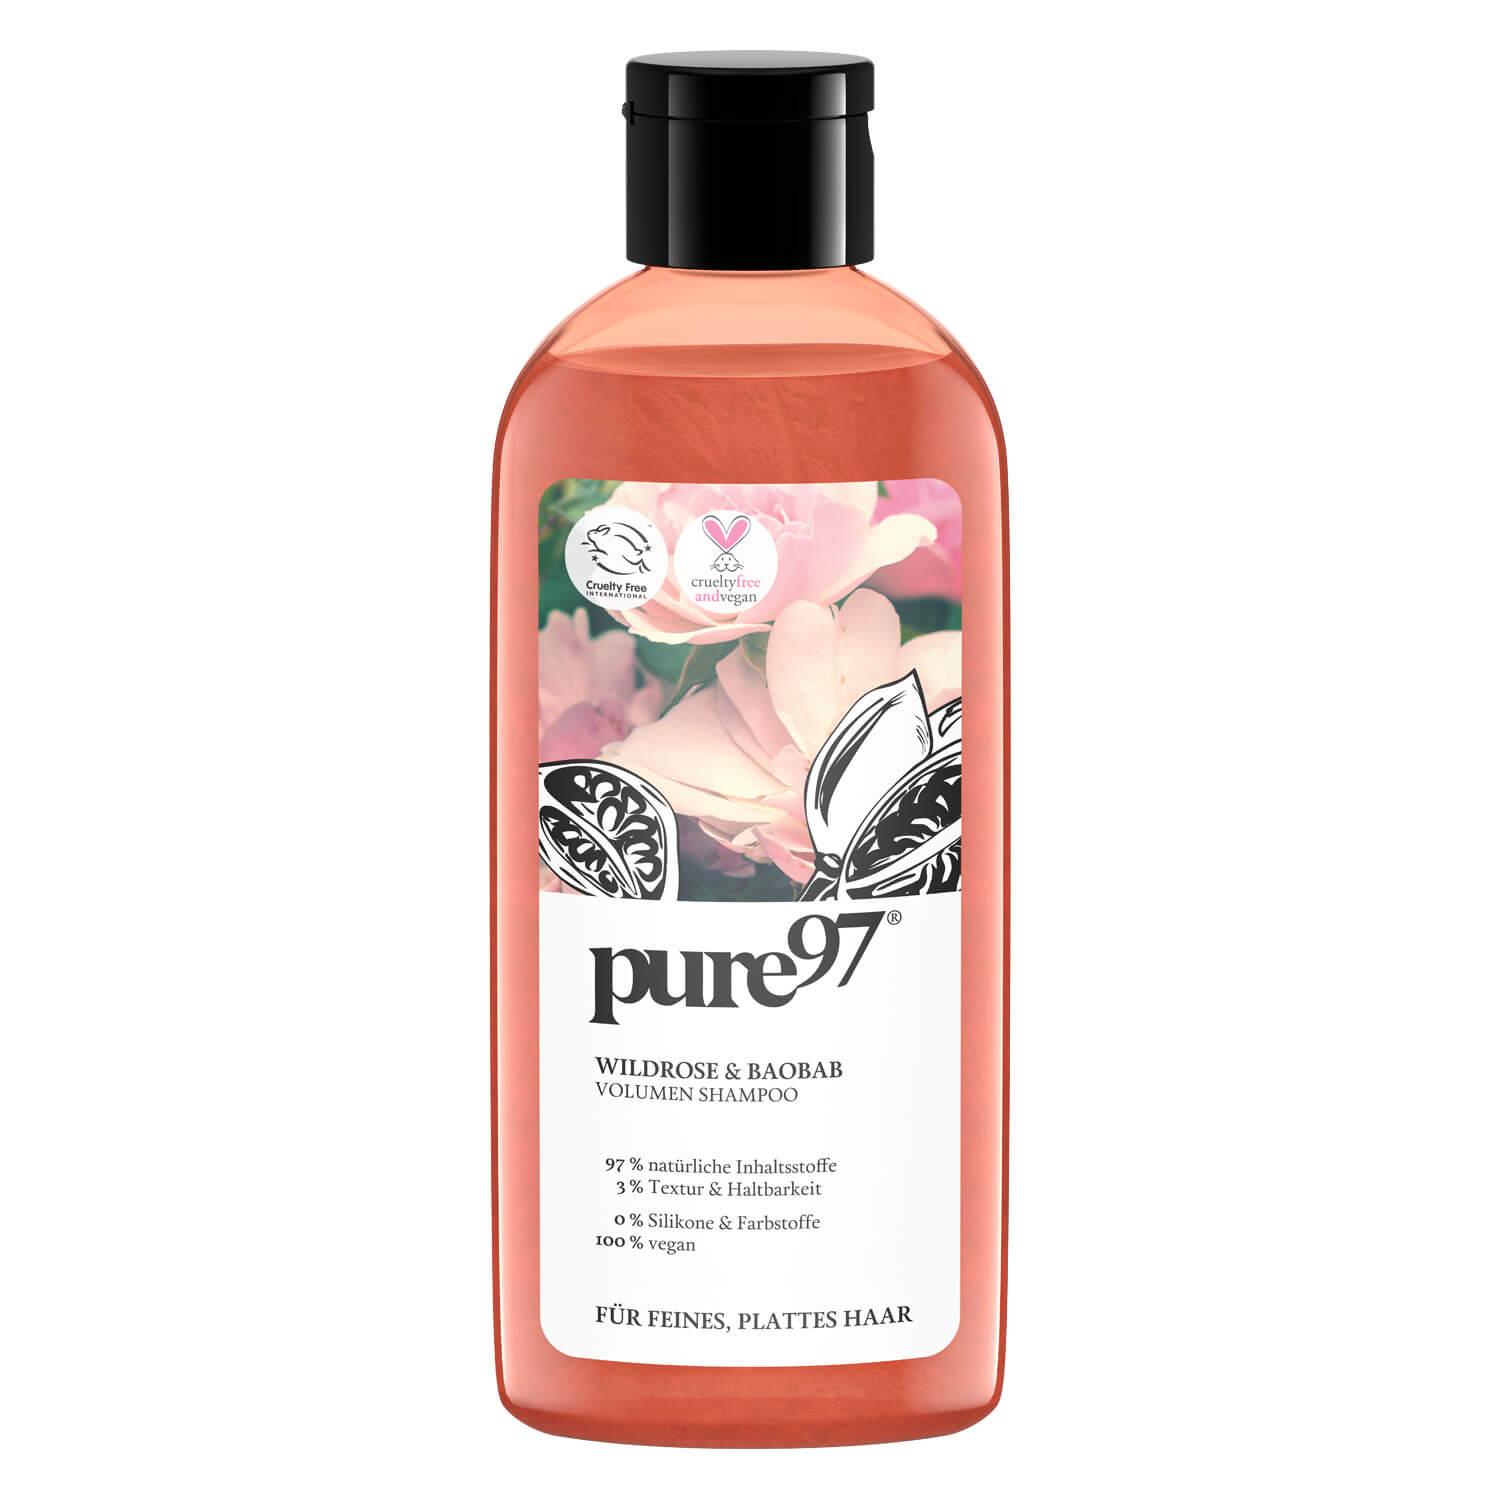 pure97 - Wildrose & Baobab Shampoo